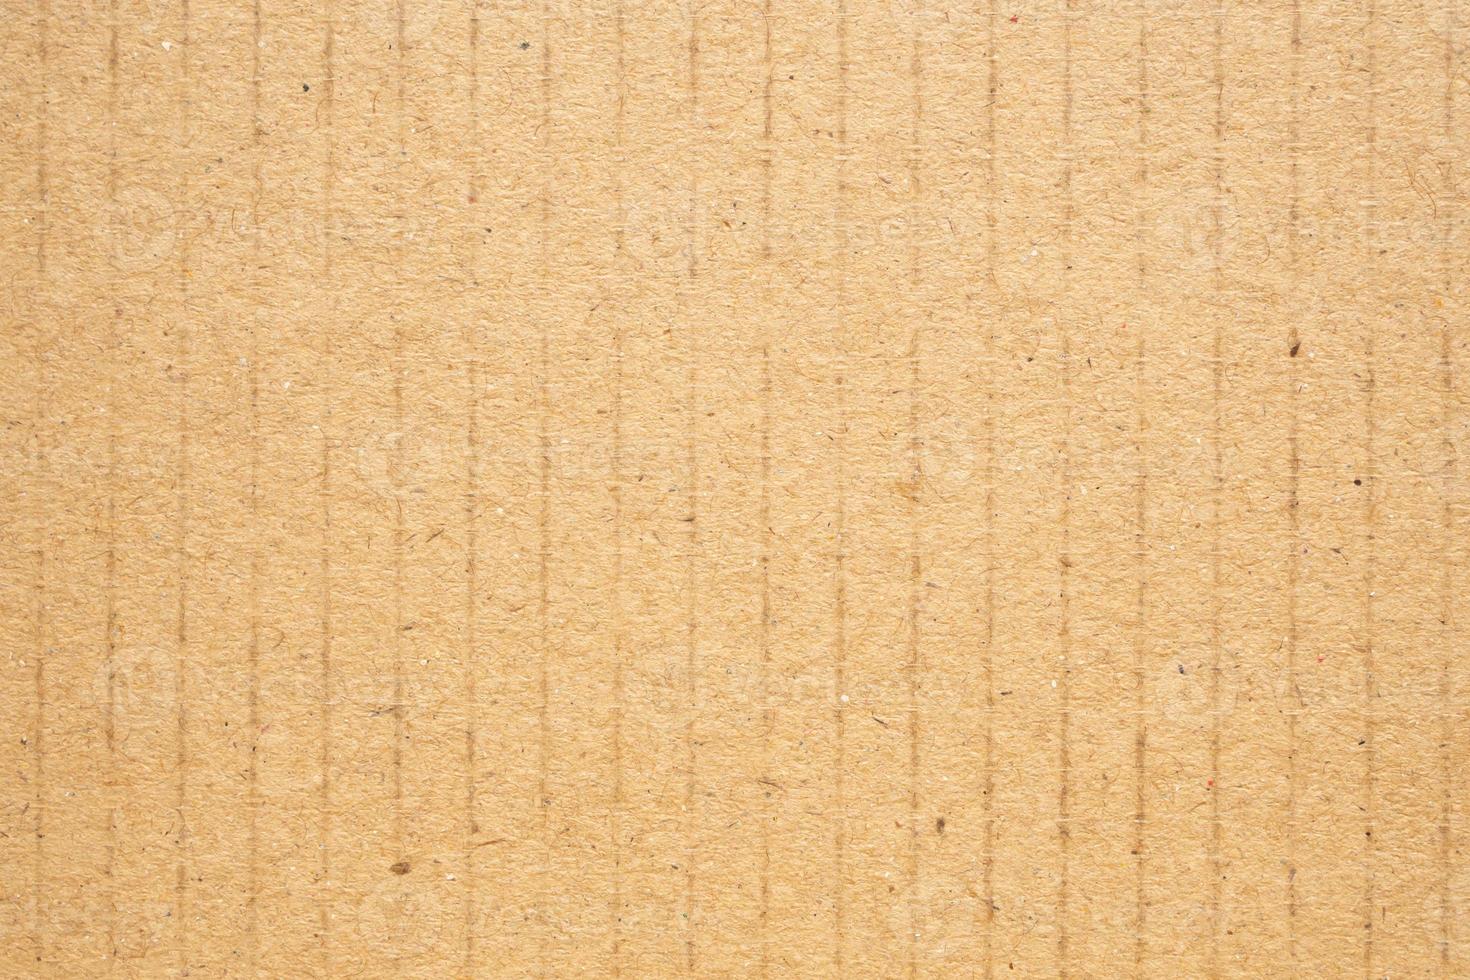 Fondo de textura de papel de caja de cartón marrón antiguo foto